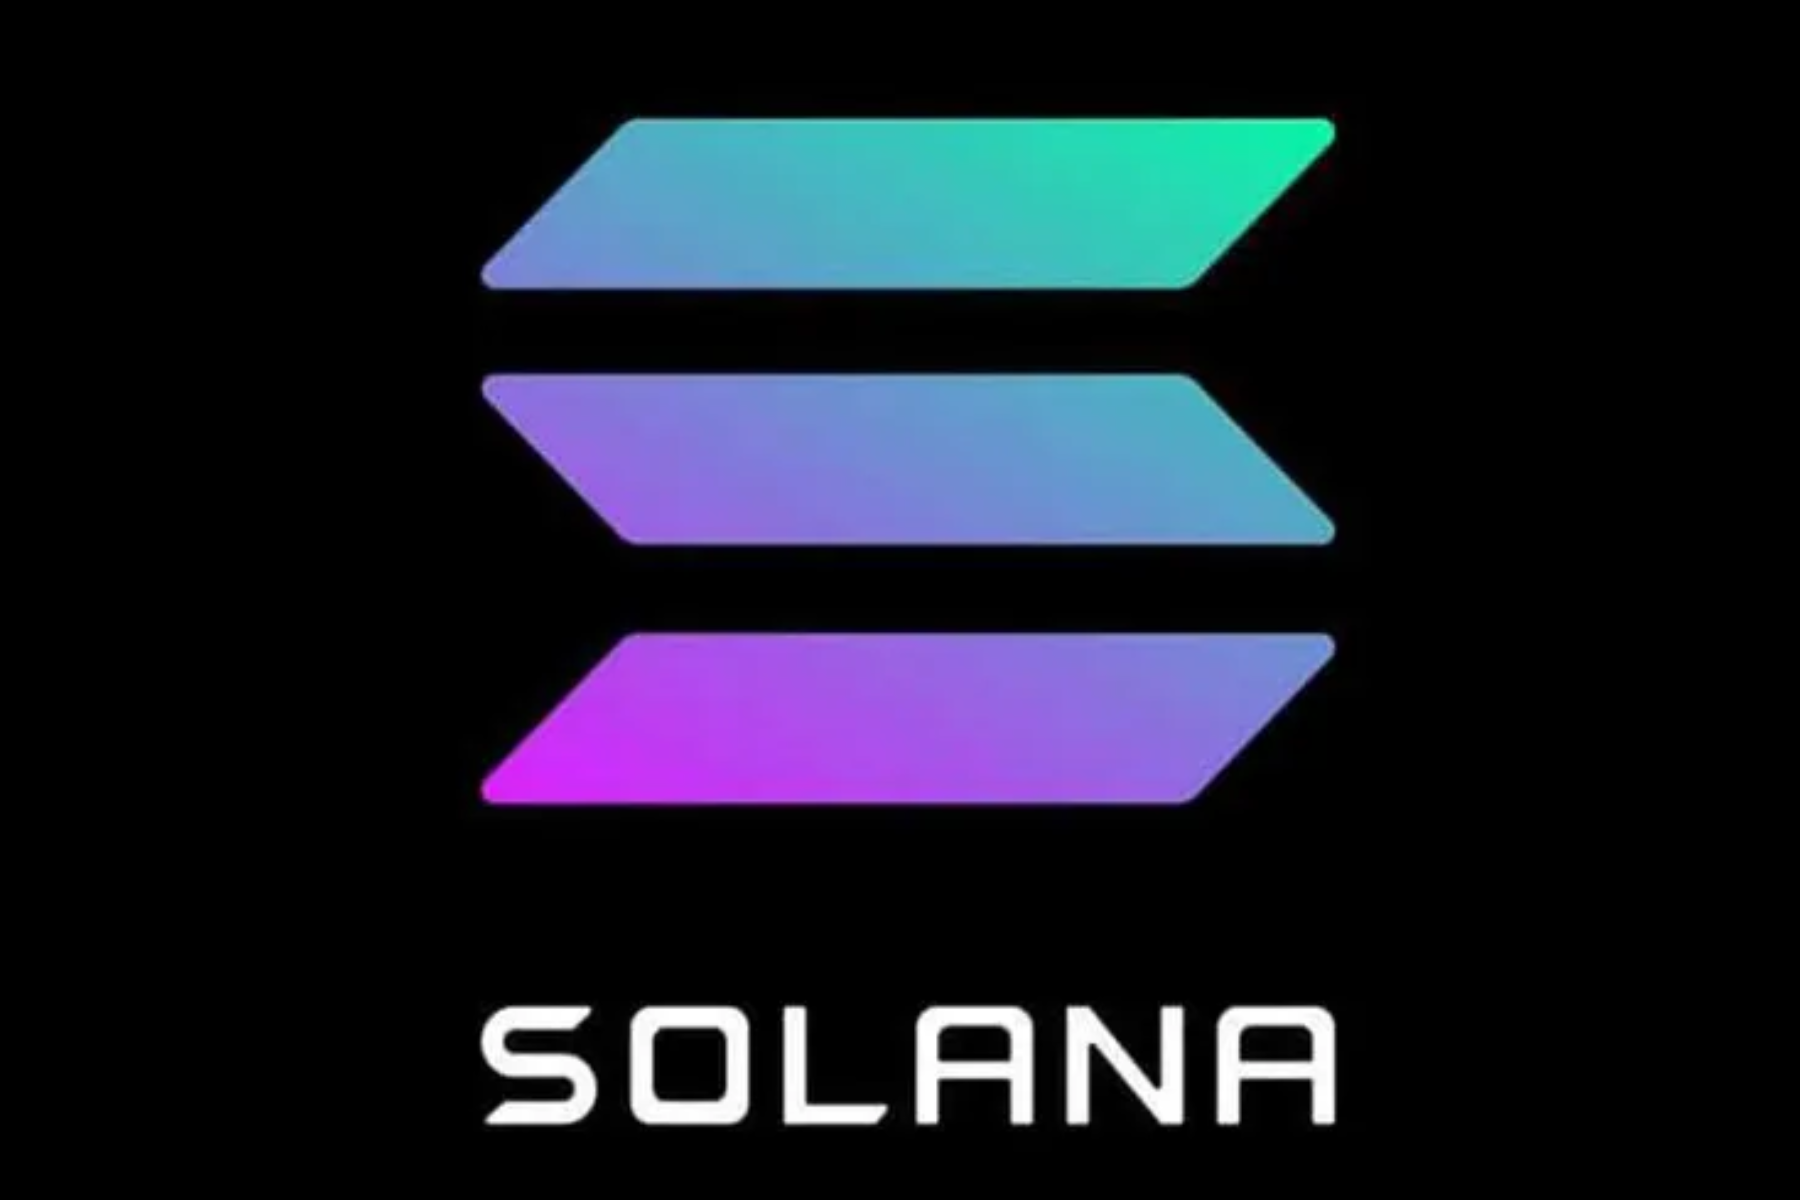 The logo of Solana (SOL)